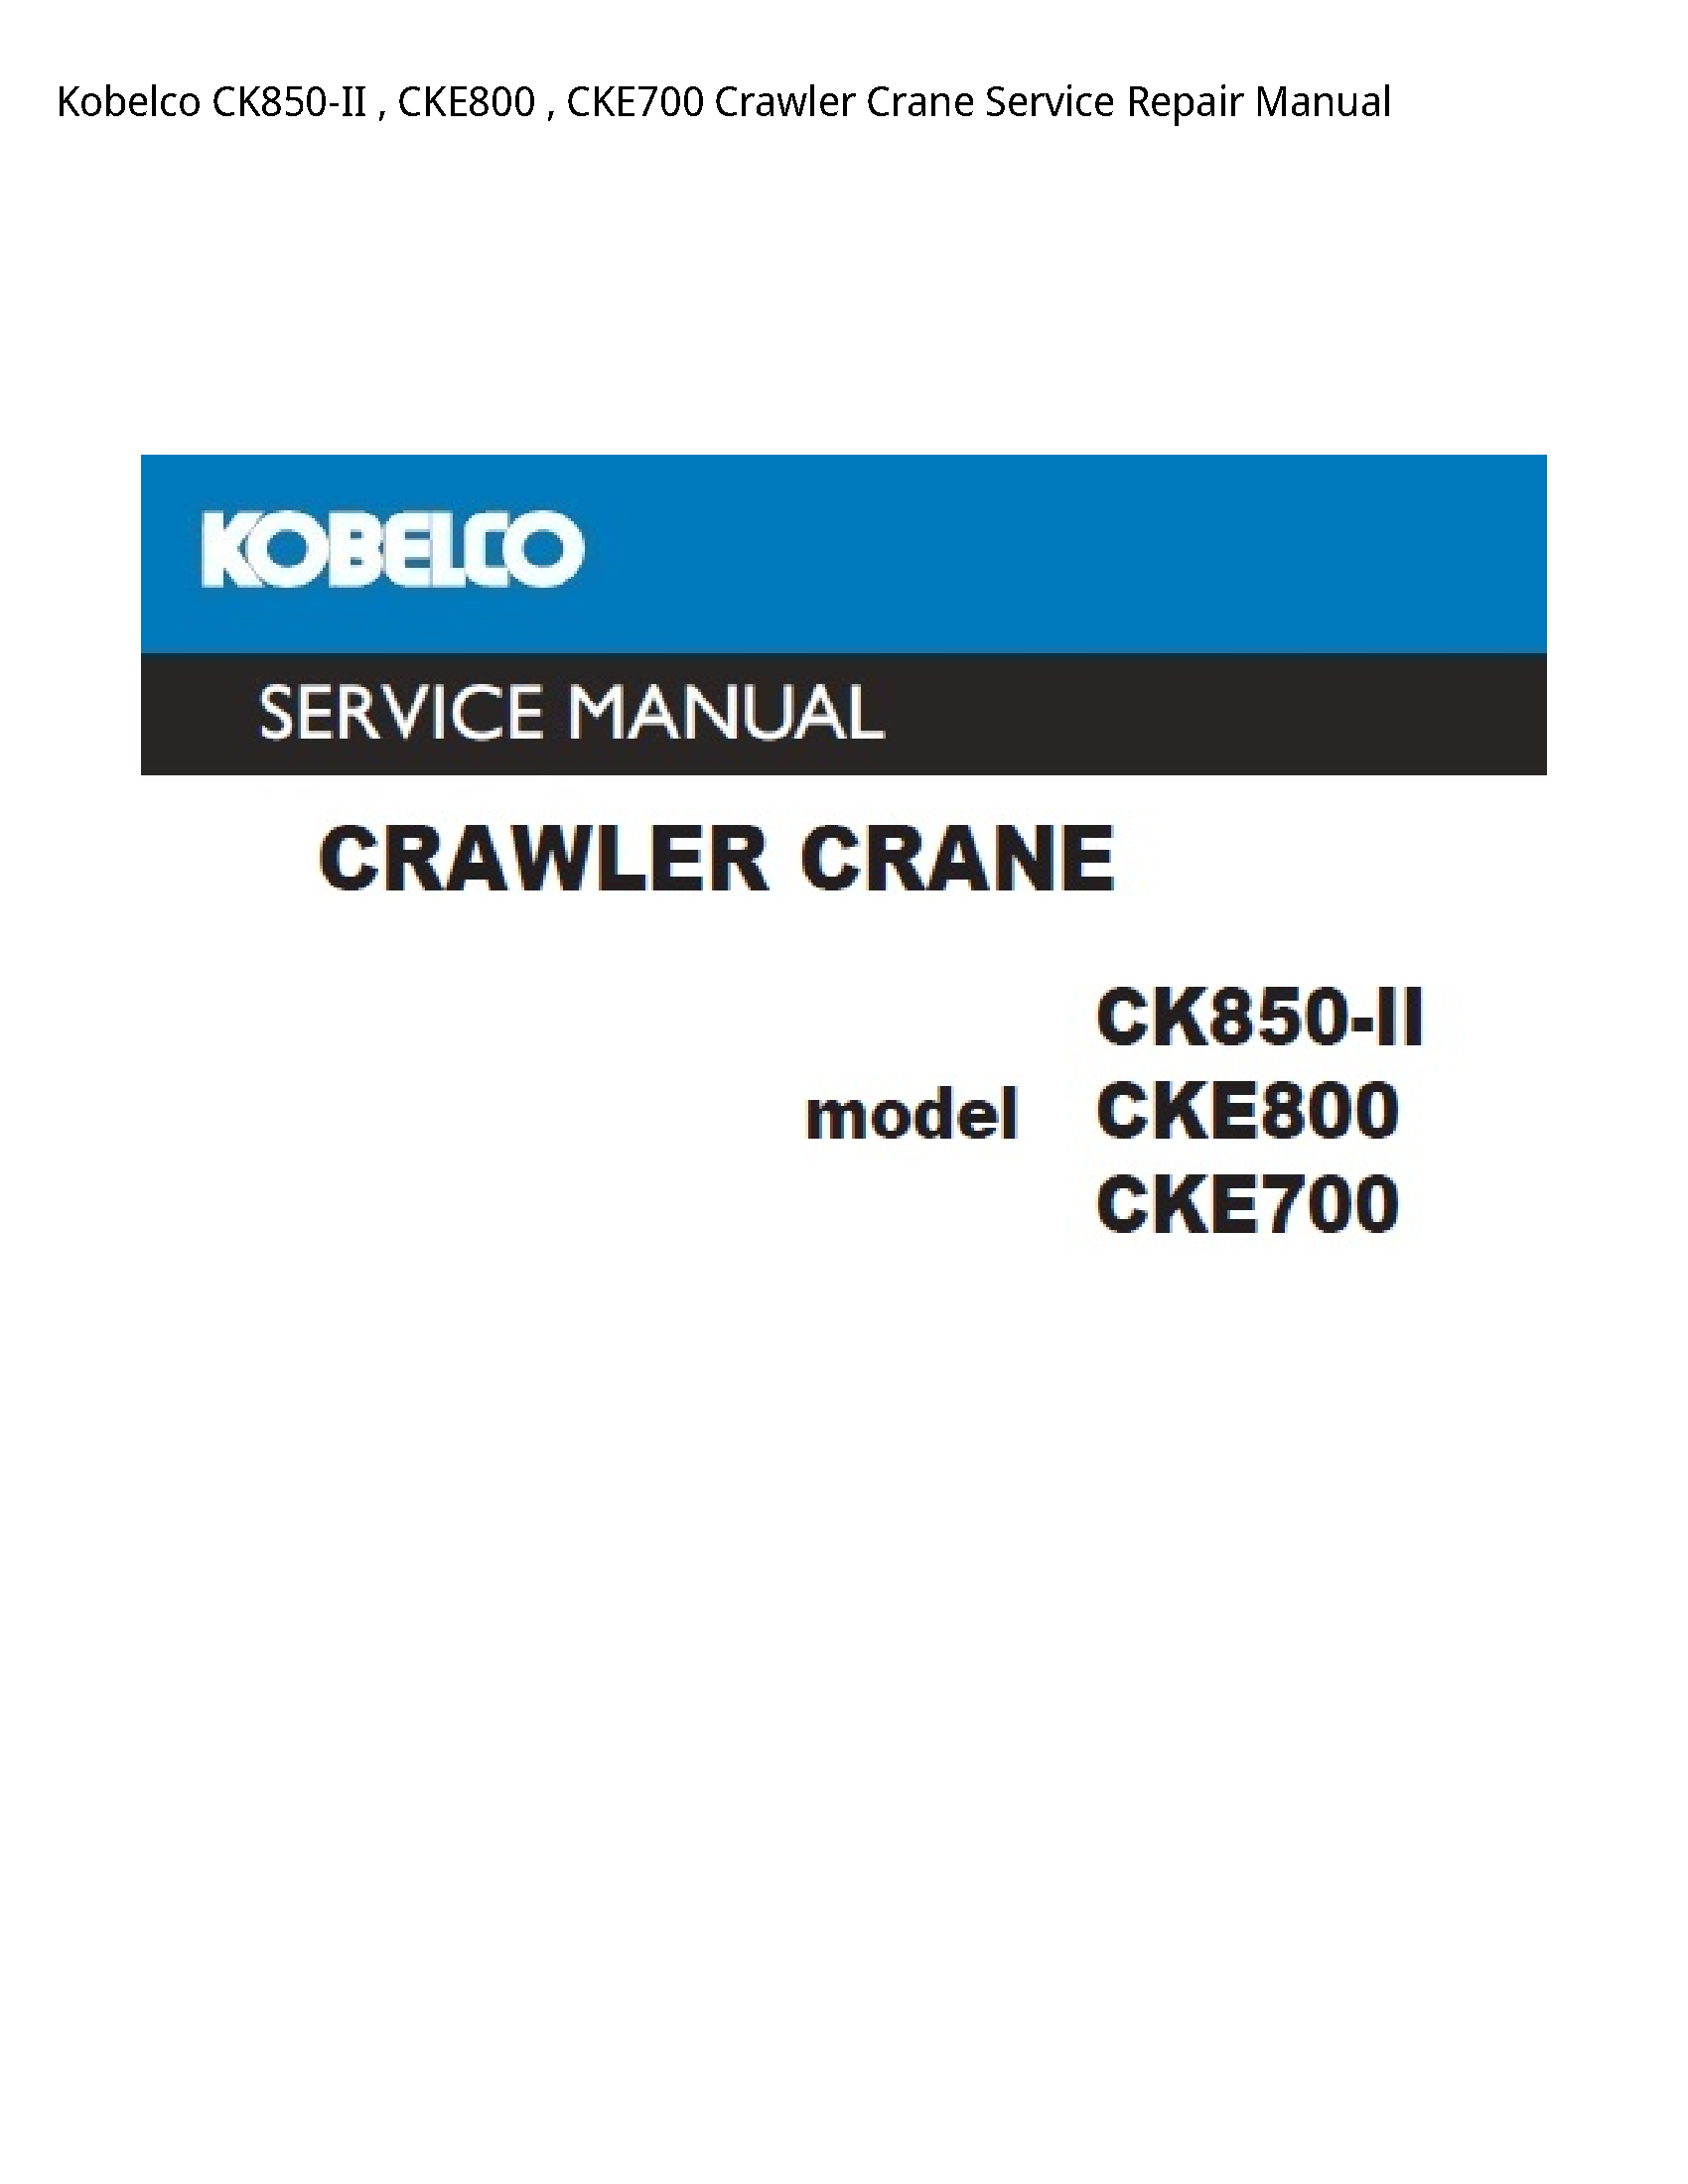 Kobelco CK850-II Crawler Crane manual